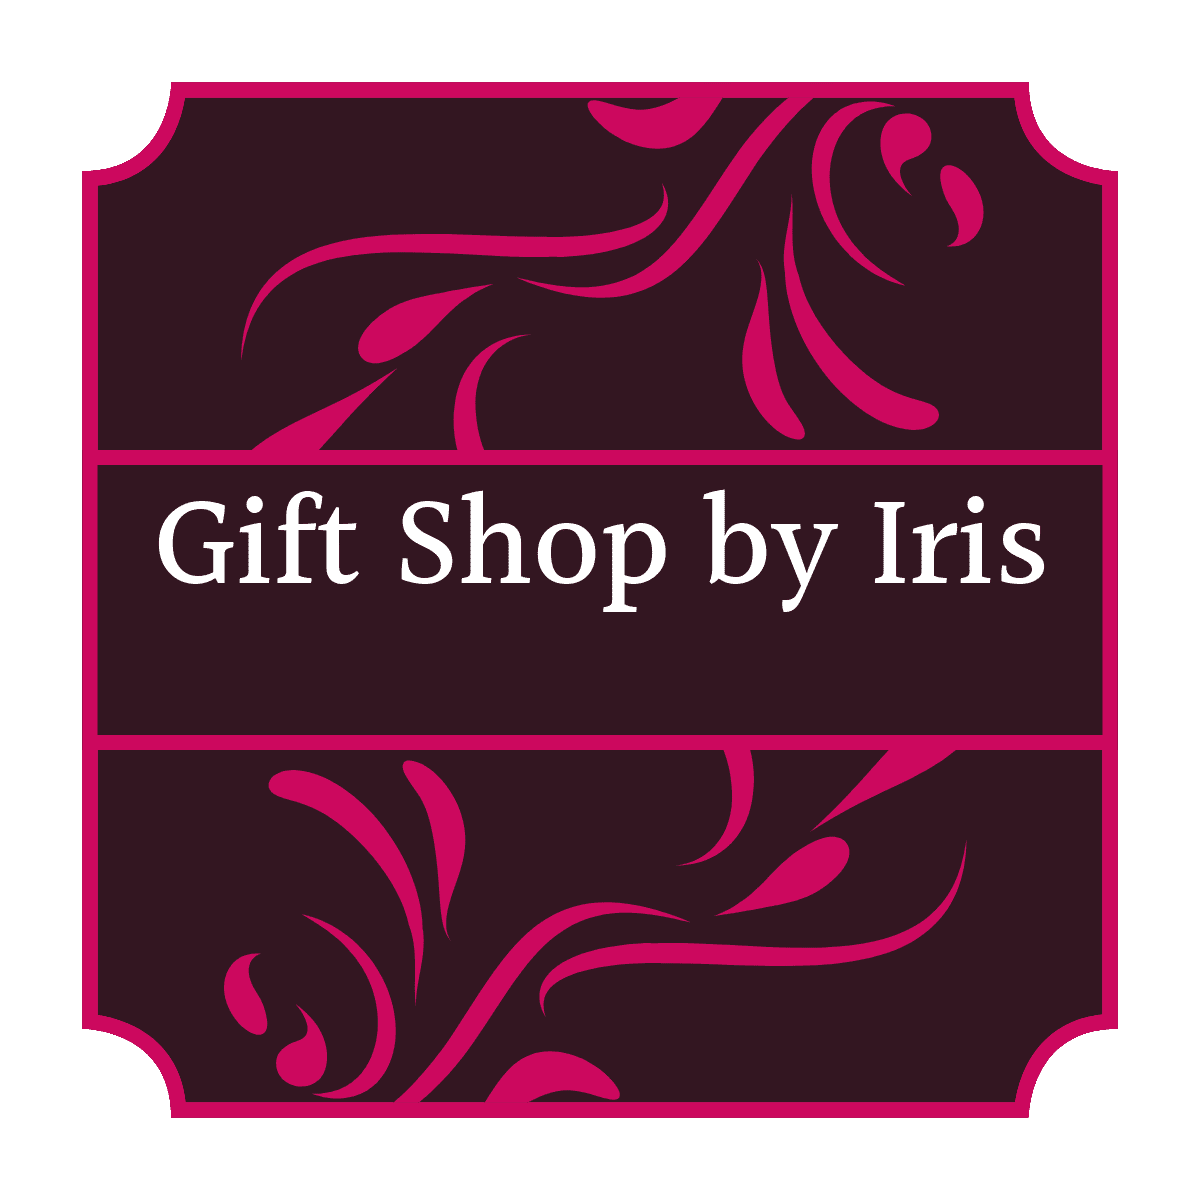 Gift Shop by Iris